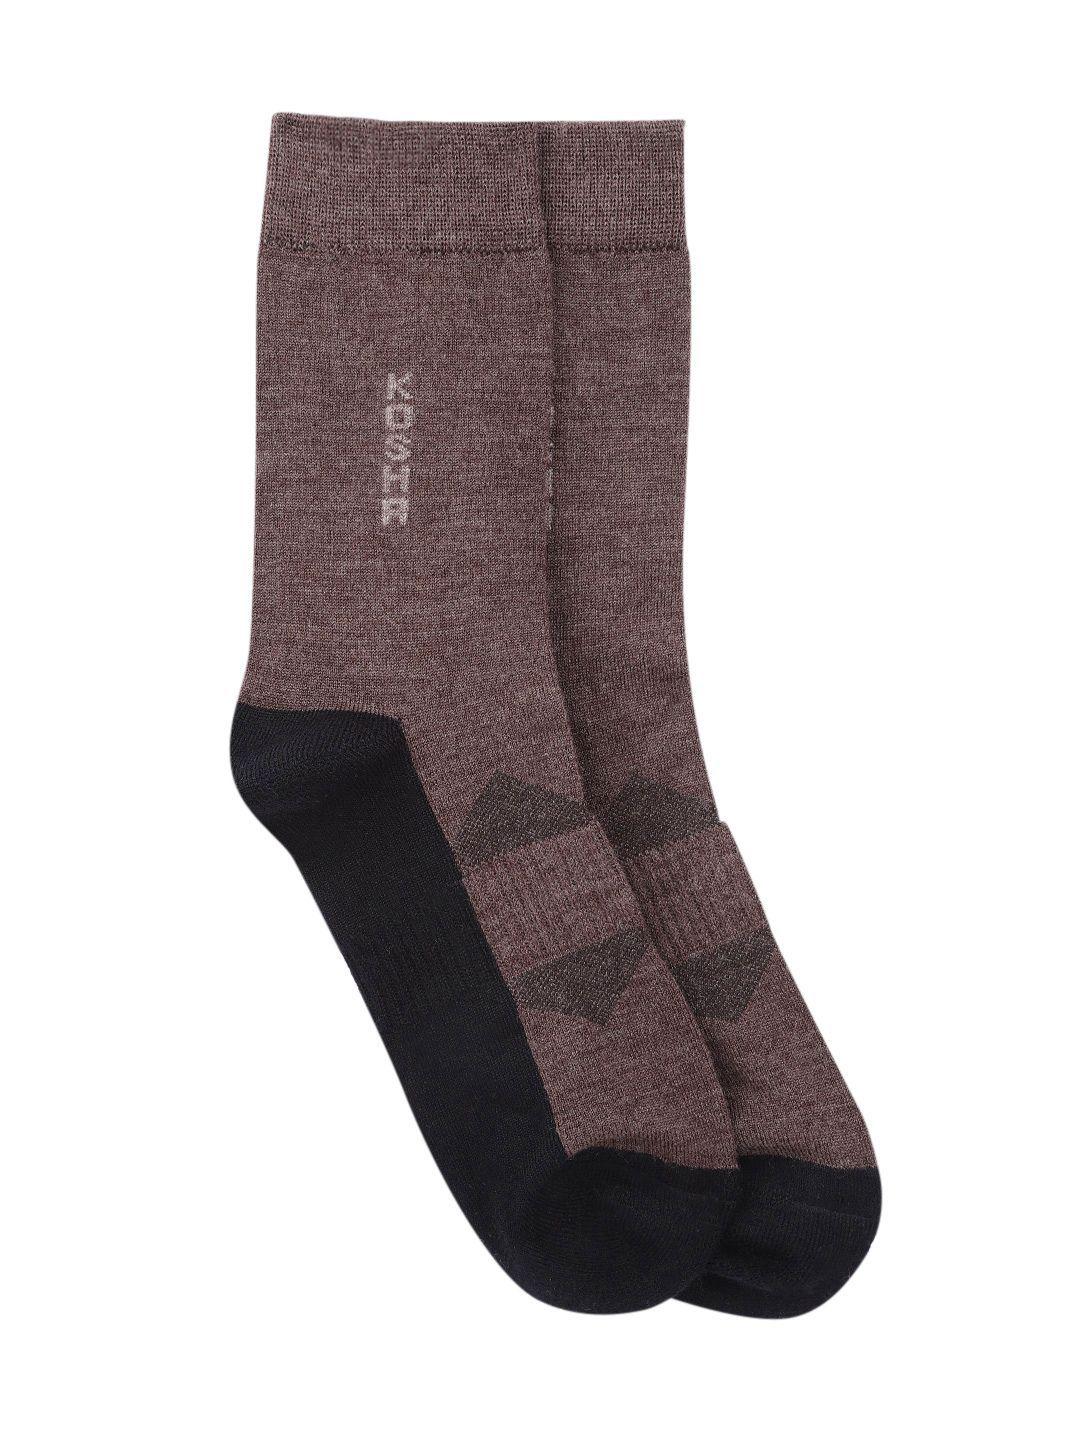 kosha men brown & black merino technical woolen socks